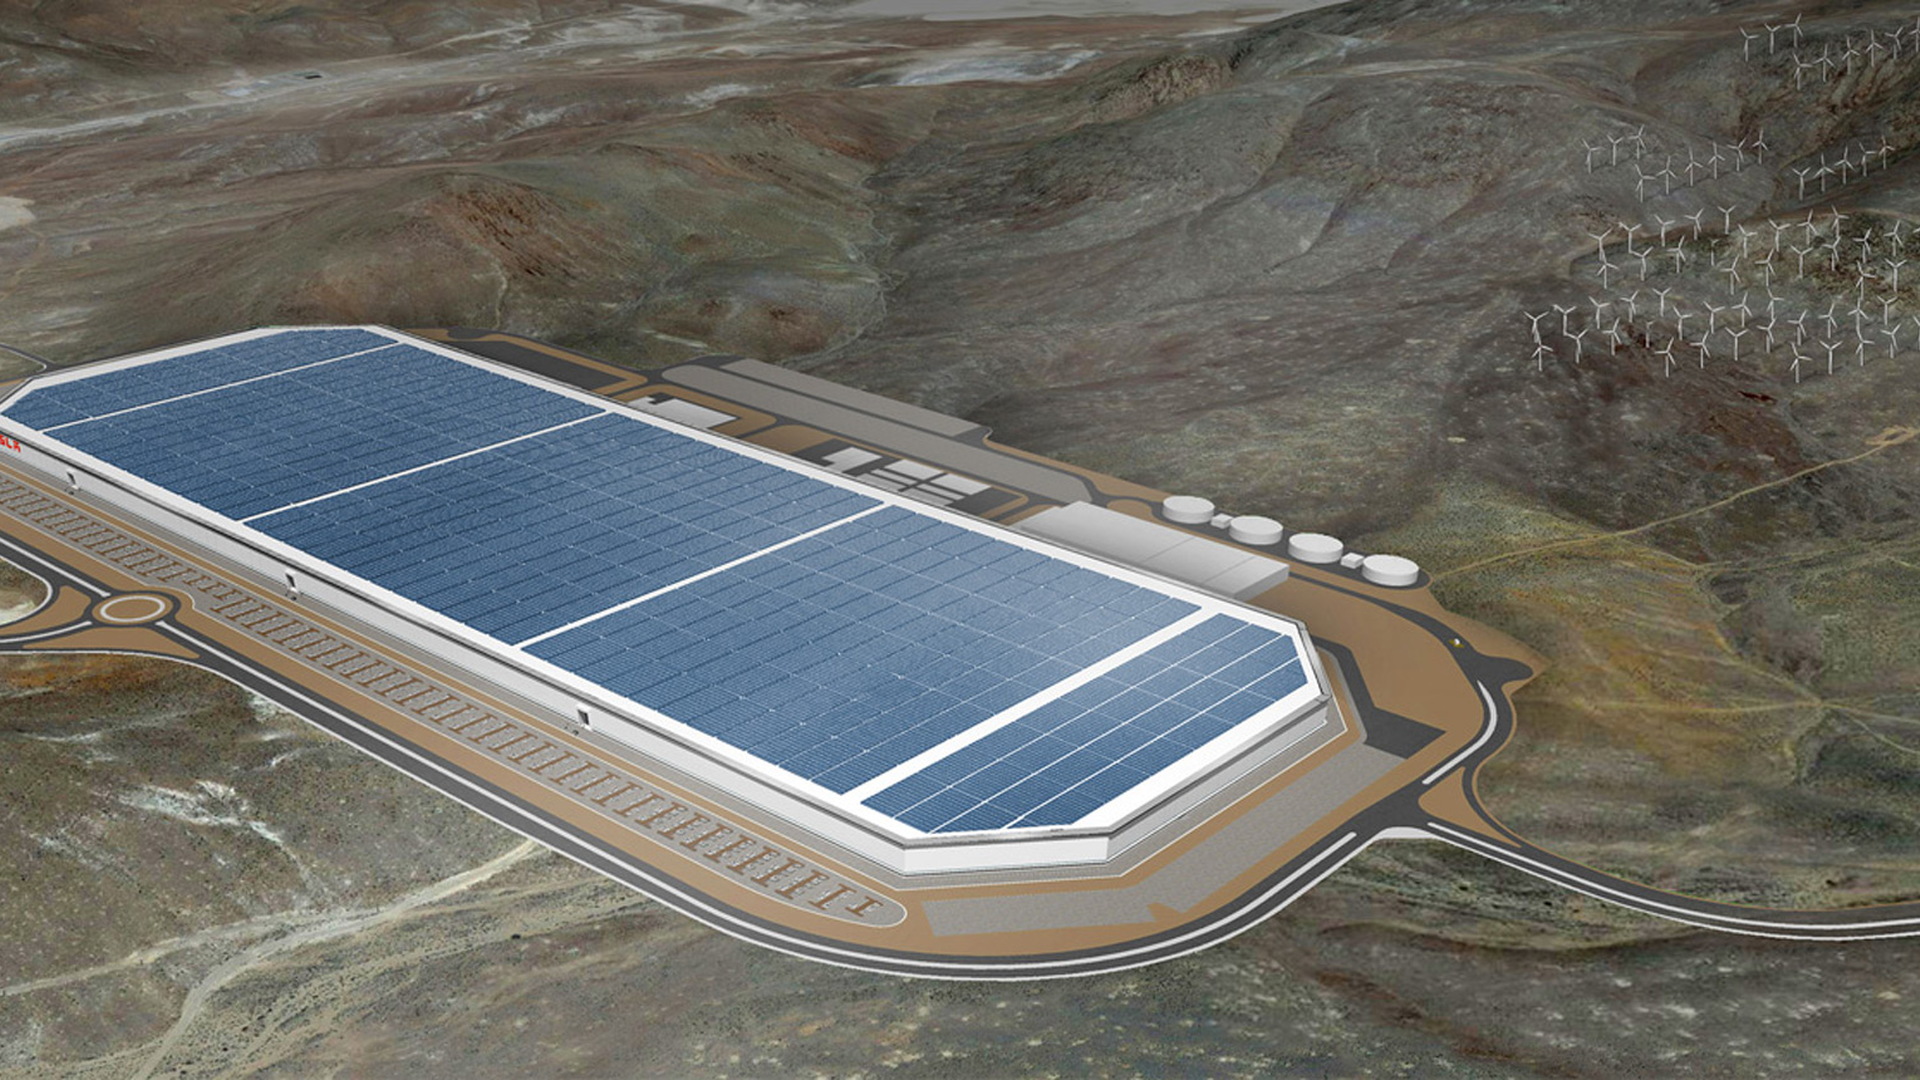 Tesla Gigafactory battery plant in Nevada